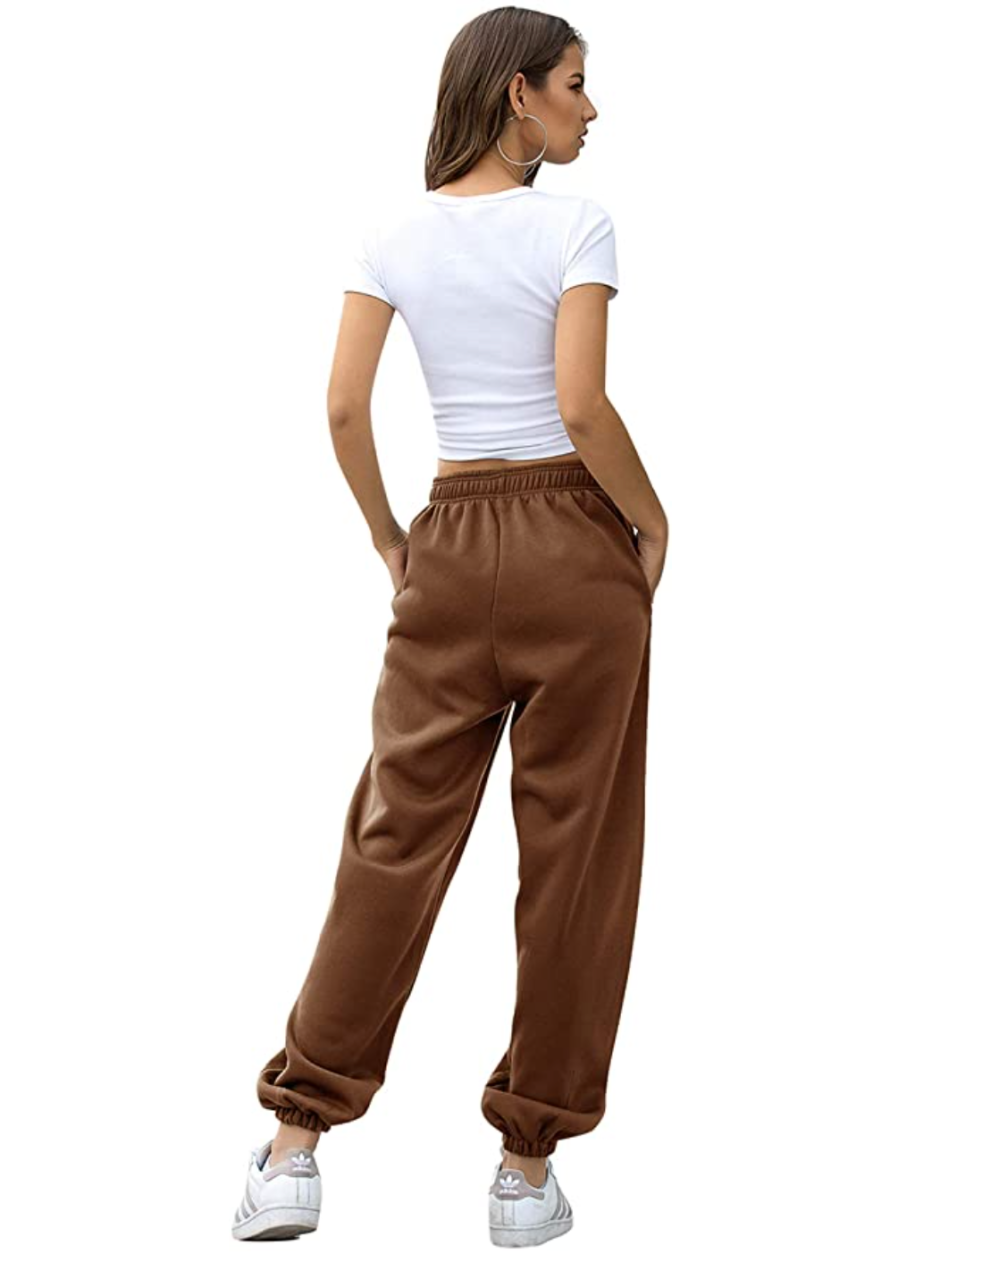 VINMEN Cinch Bottom Sweatpants for Women with Pockets